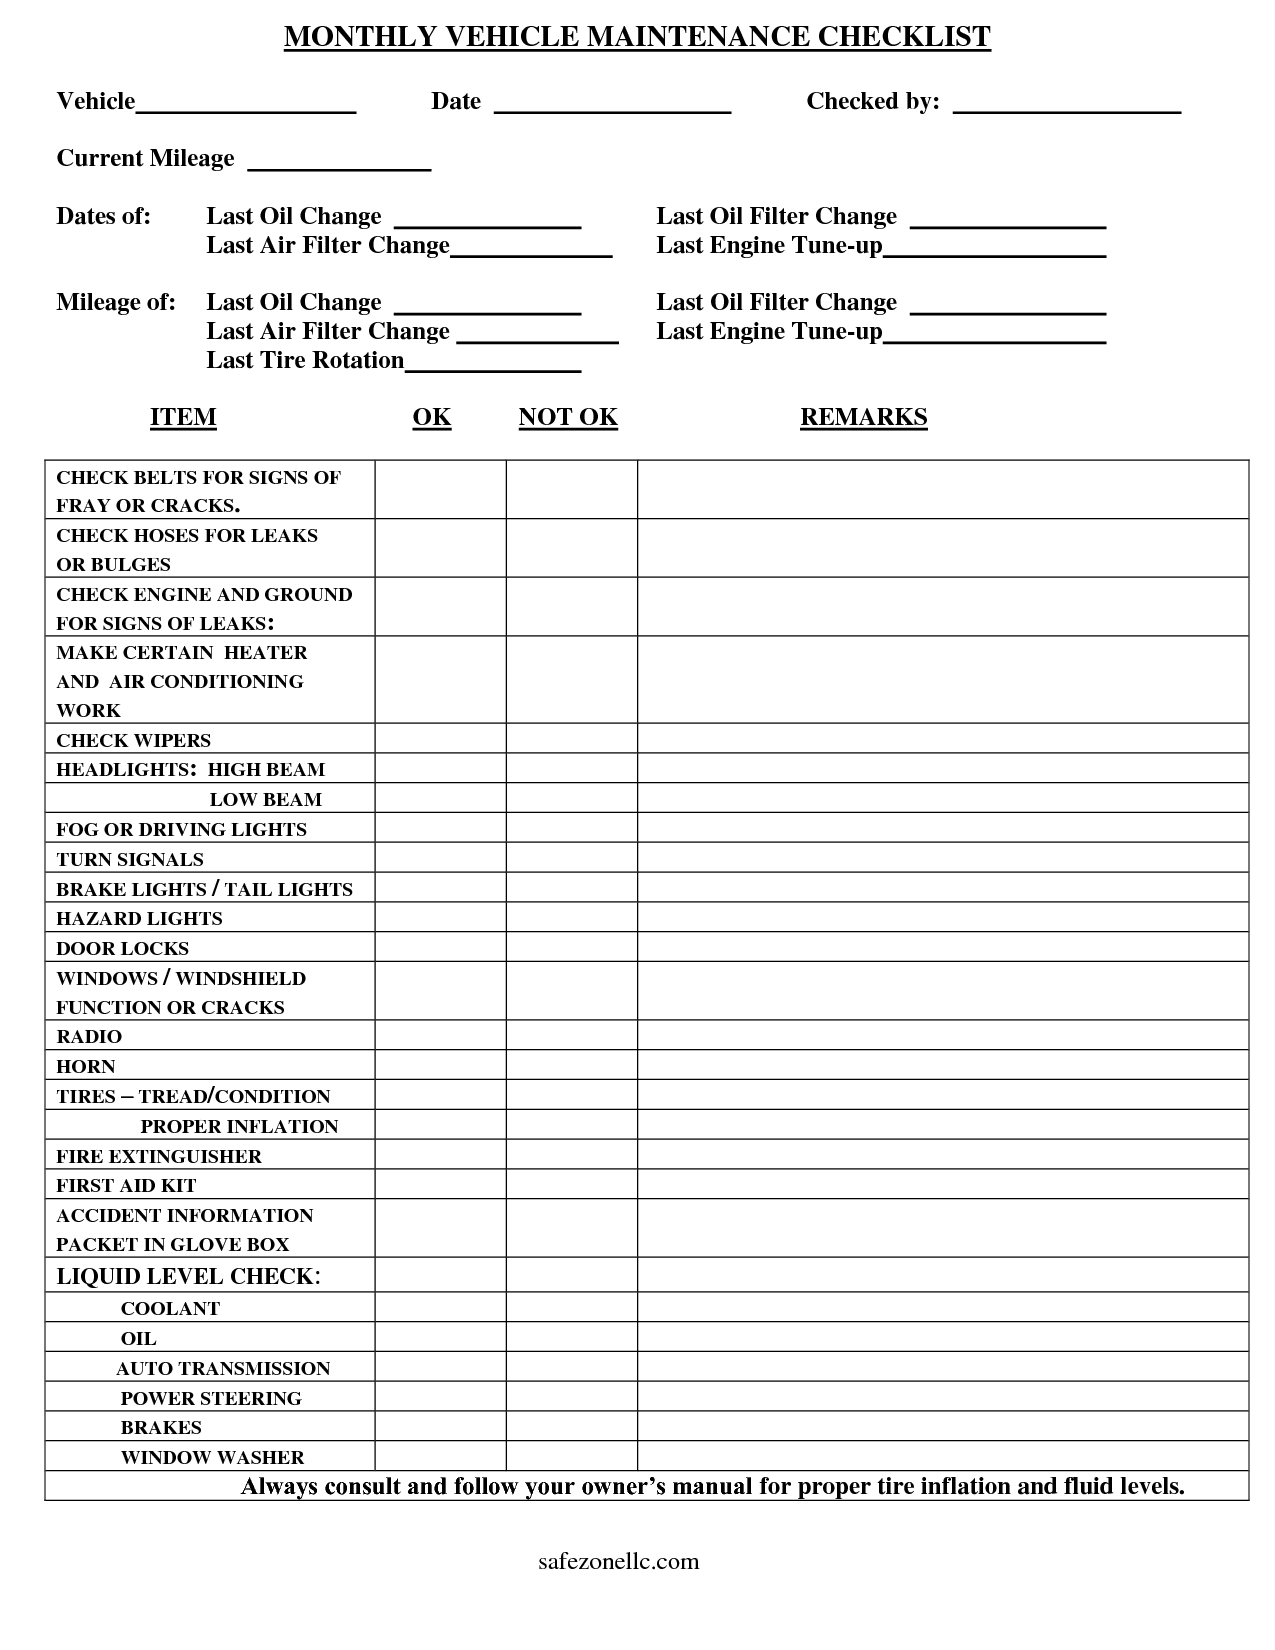 Vehicle Maintenance Checklist Template | Car Maintenance Inside Equipment Fault Report Template